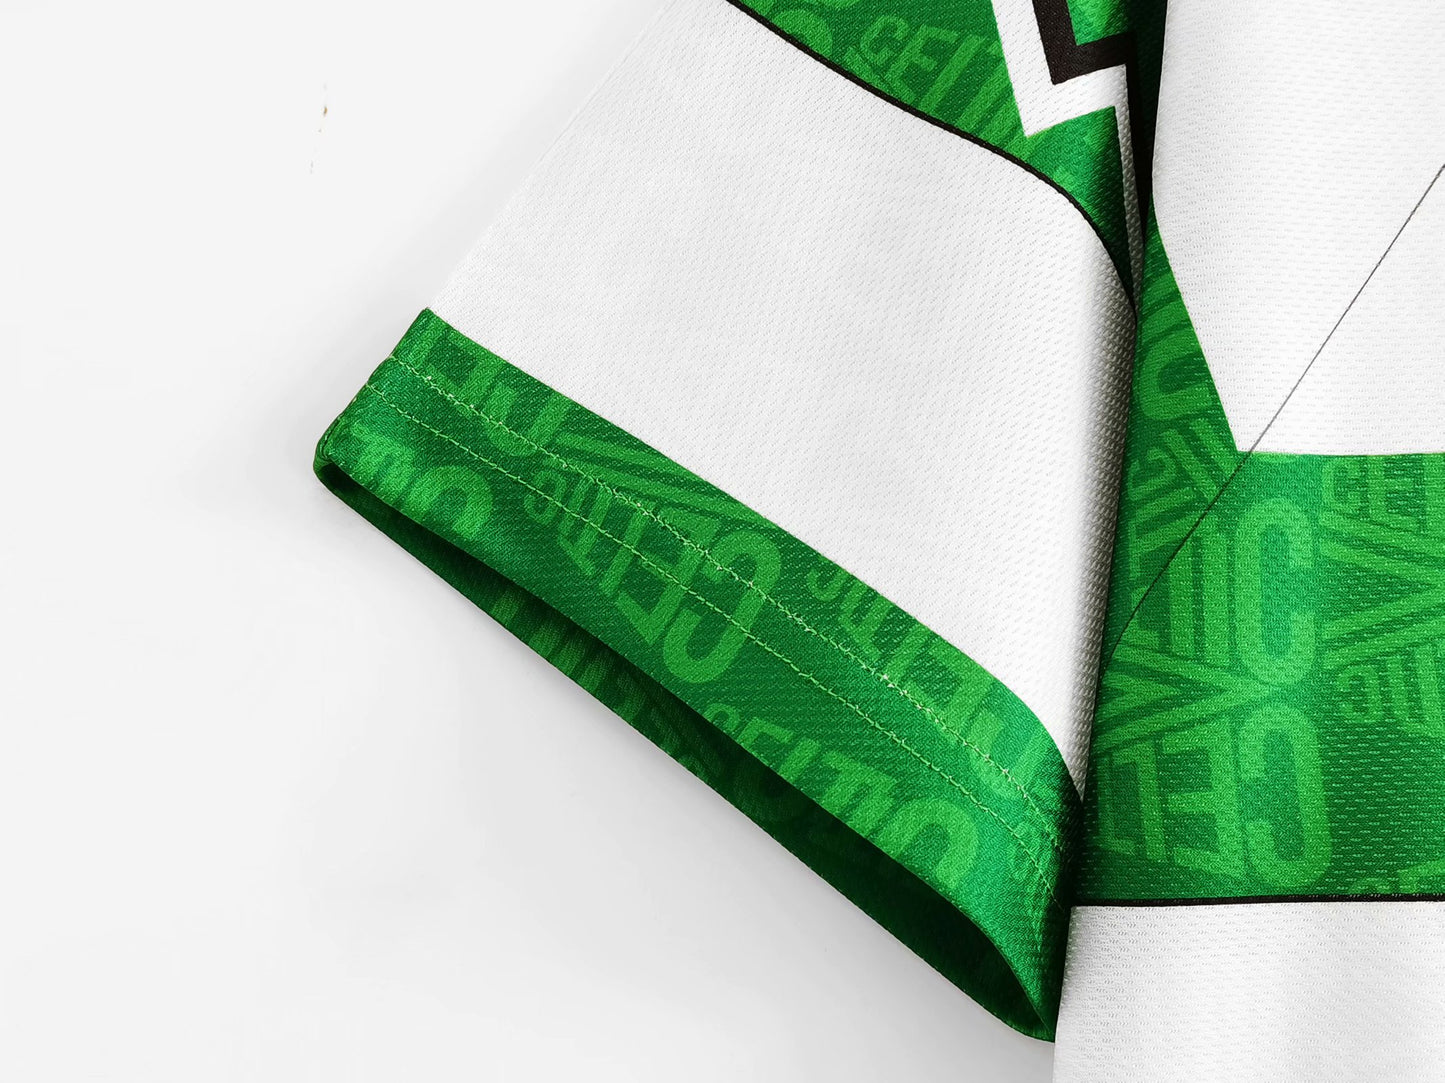 Celtic 91-92 Home Shirt